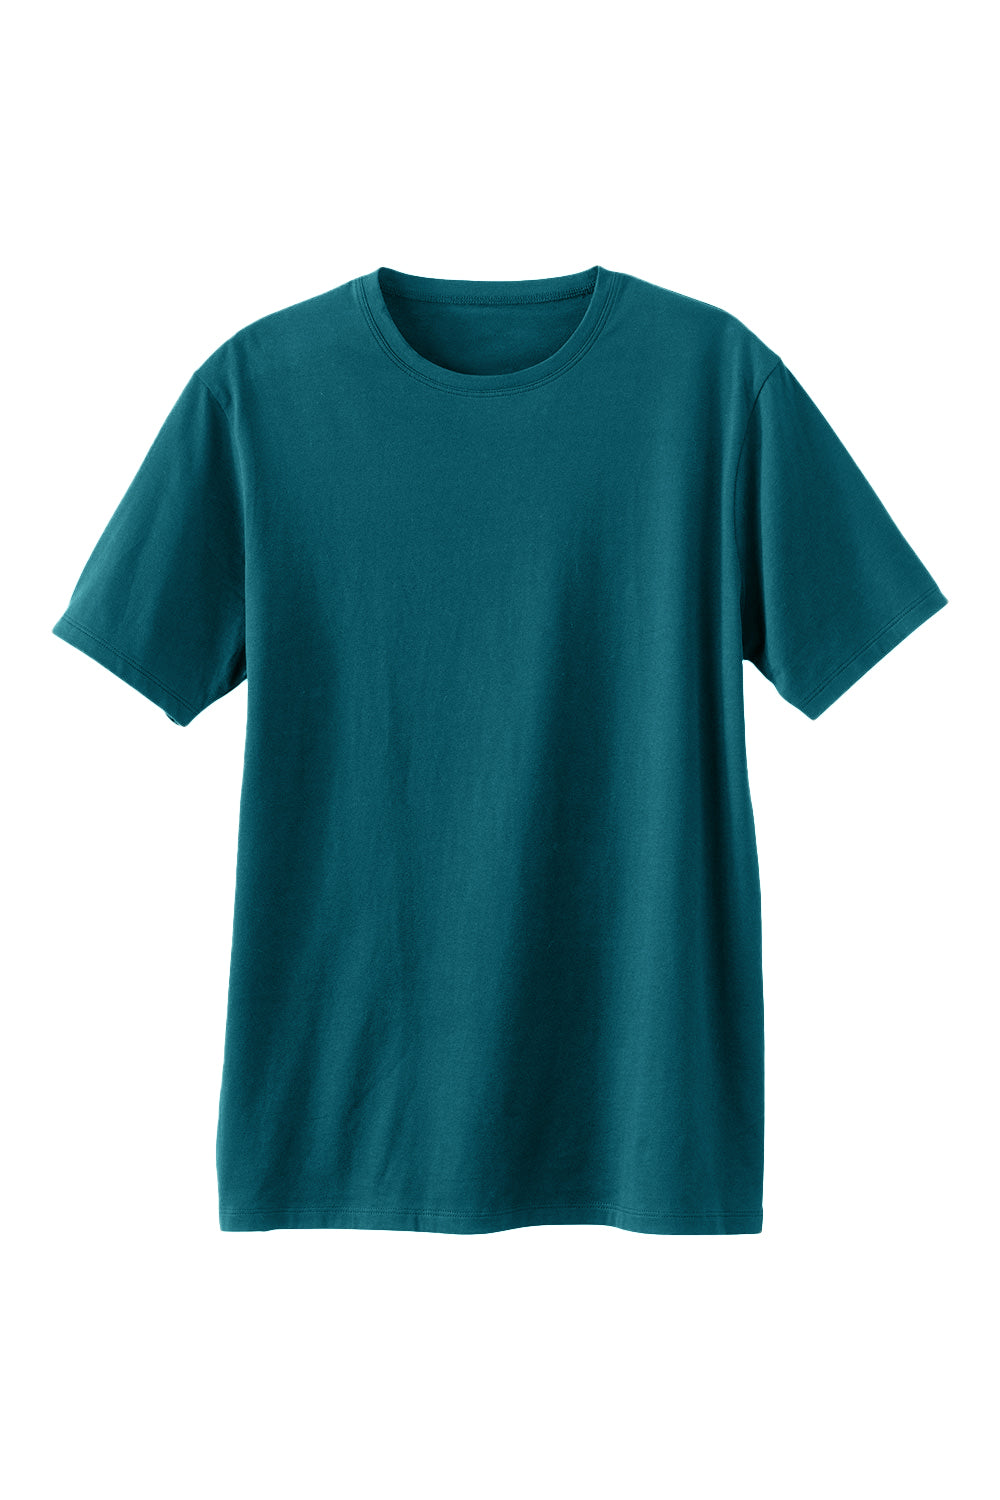 Men's Organic All-Cotton Crew Neck T-Shirt - Fair Indigo, Size XL / Deep Teal